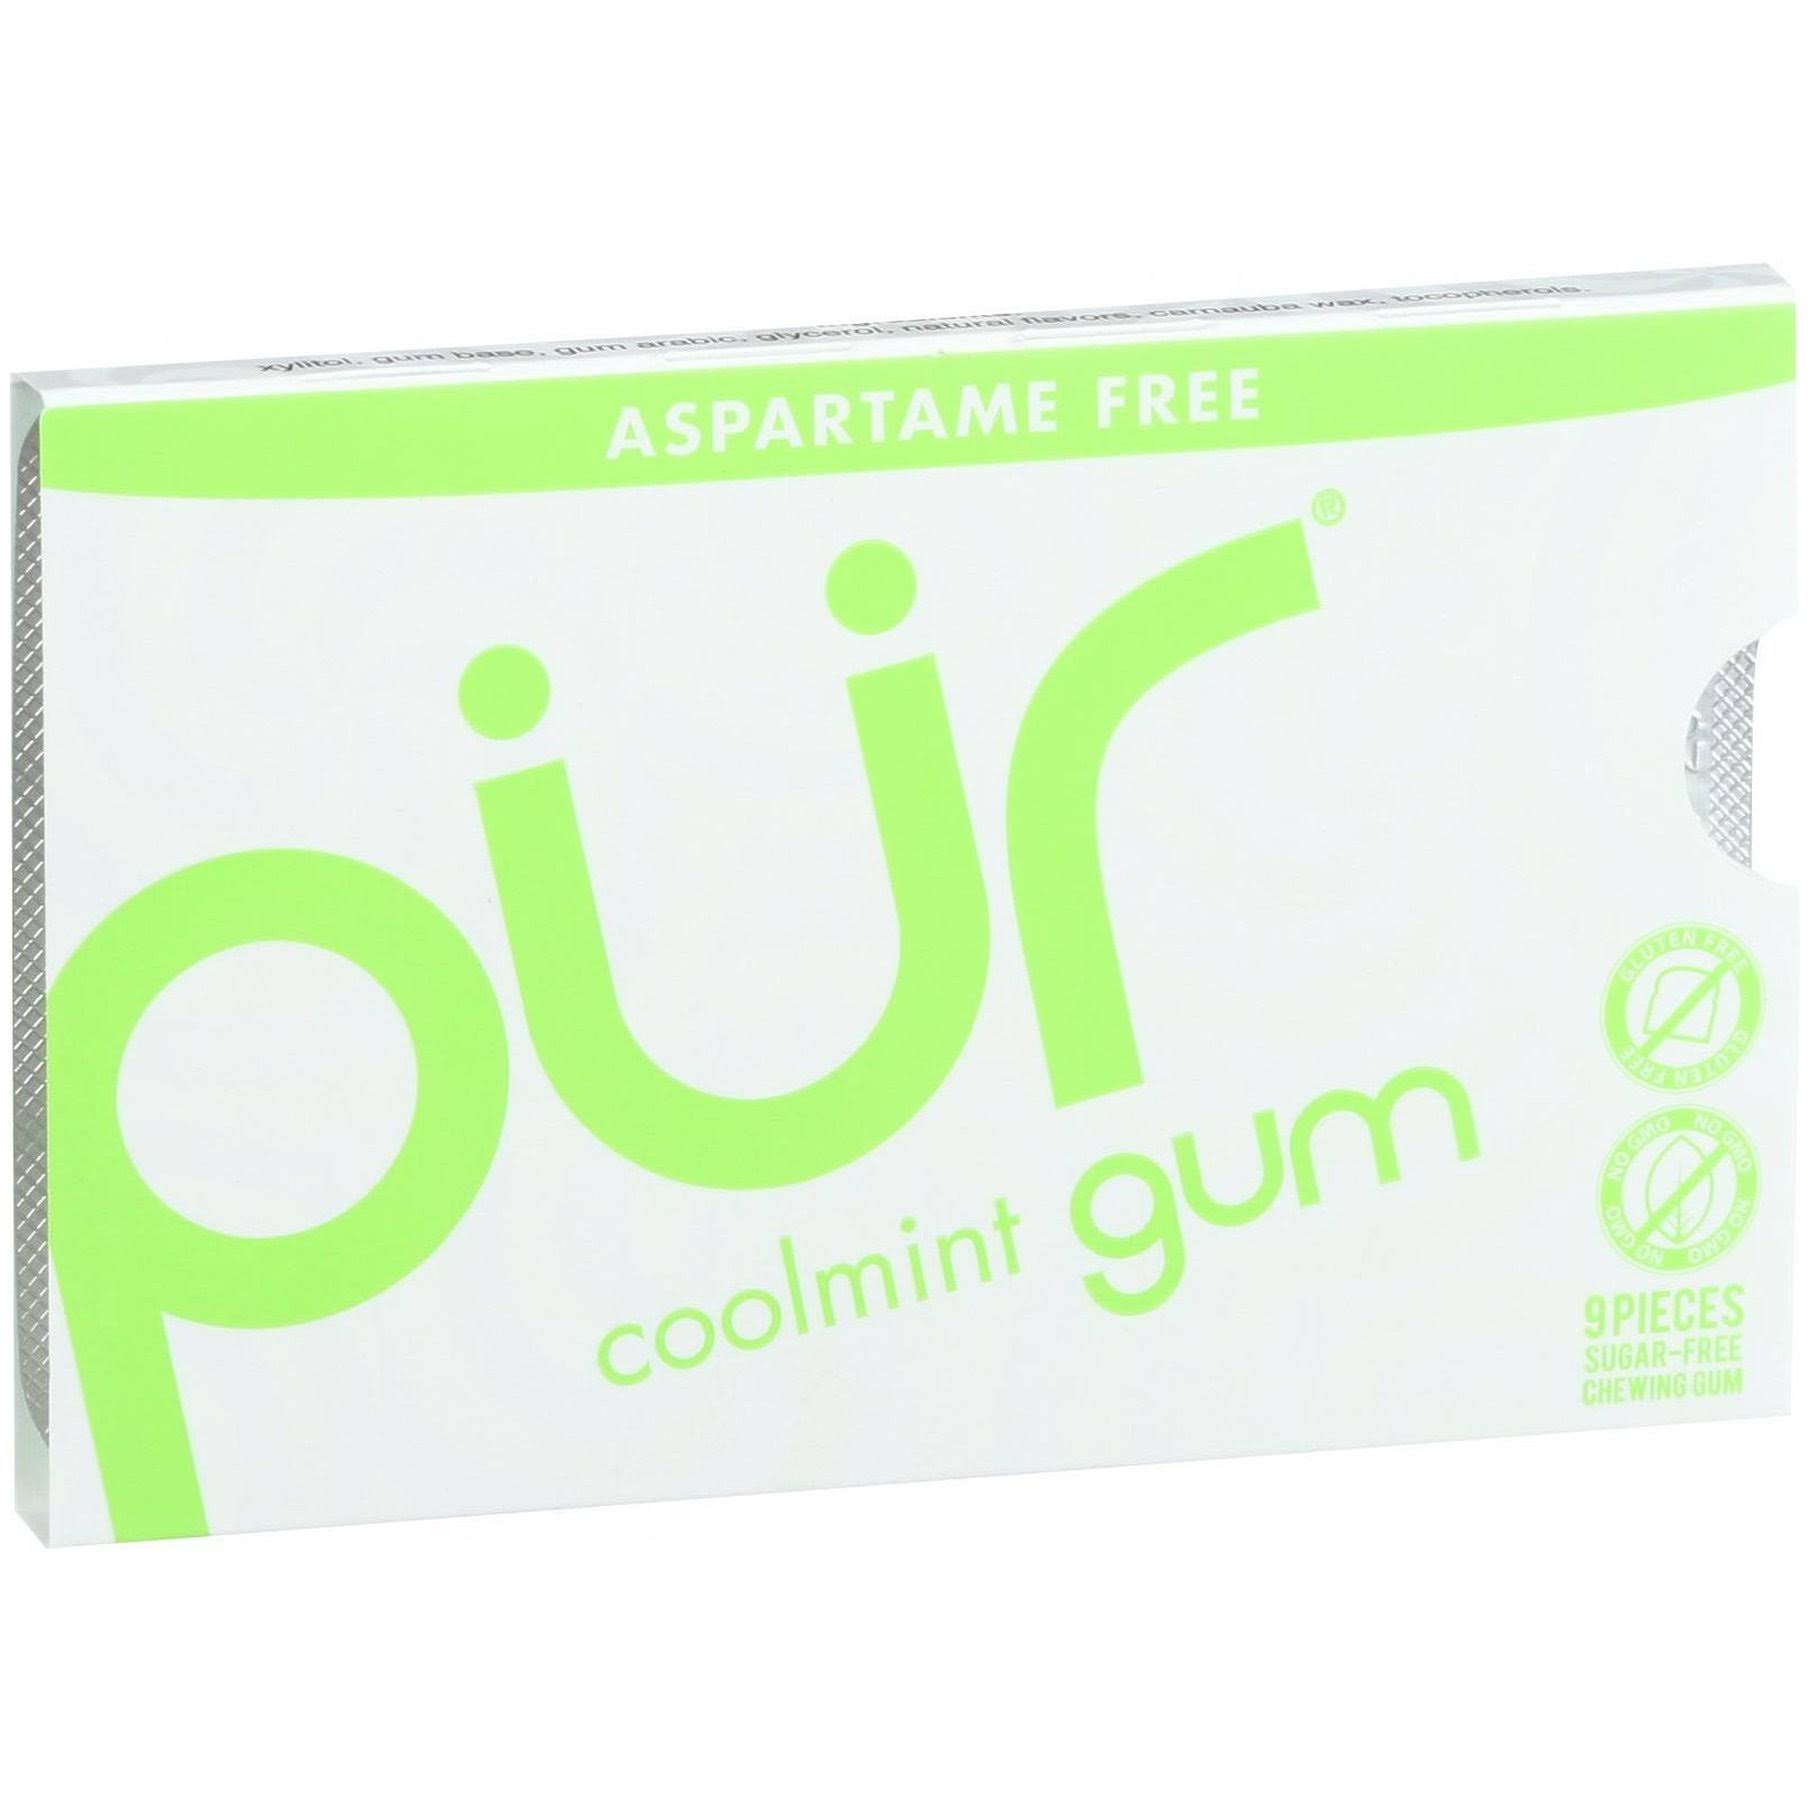 Pur Chewing Gum - Sugar Free, Coolmint, 9pcs